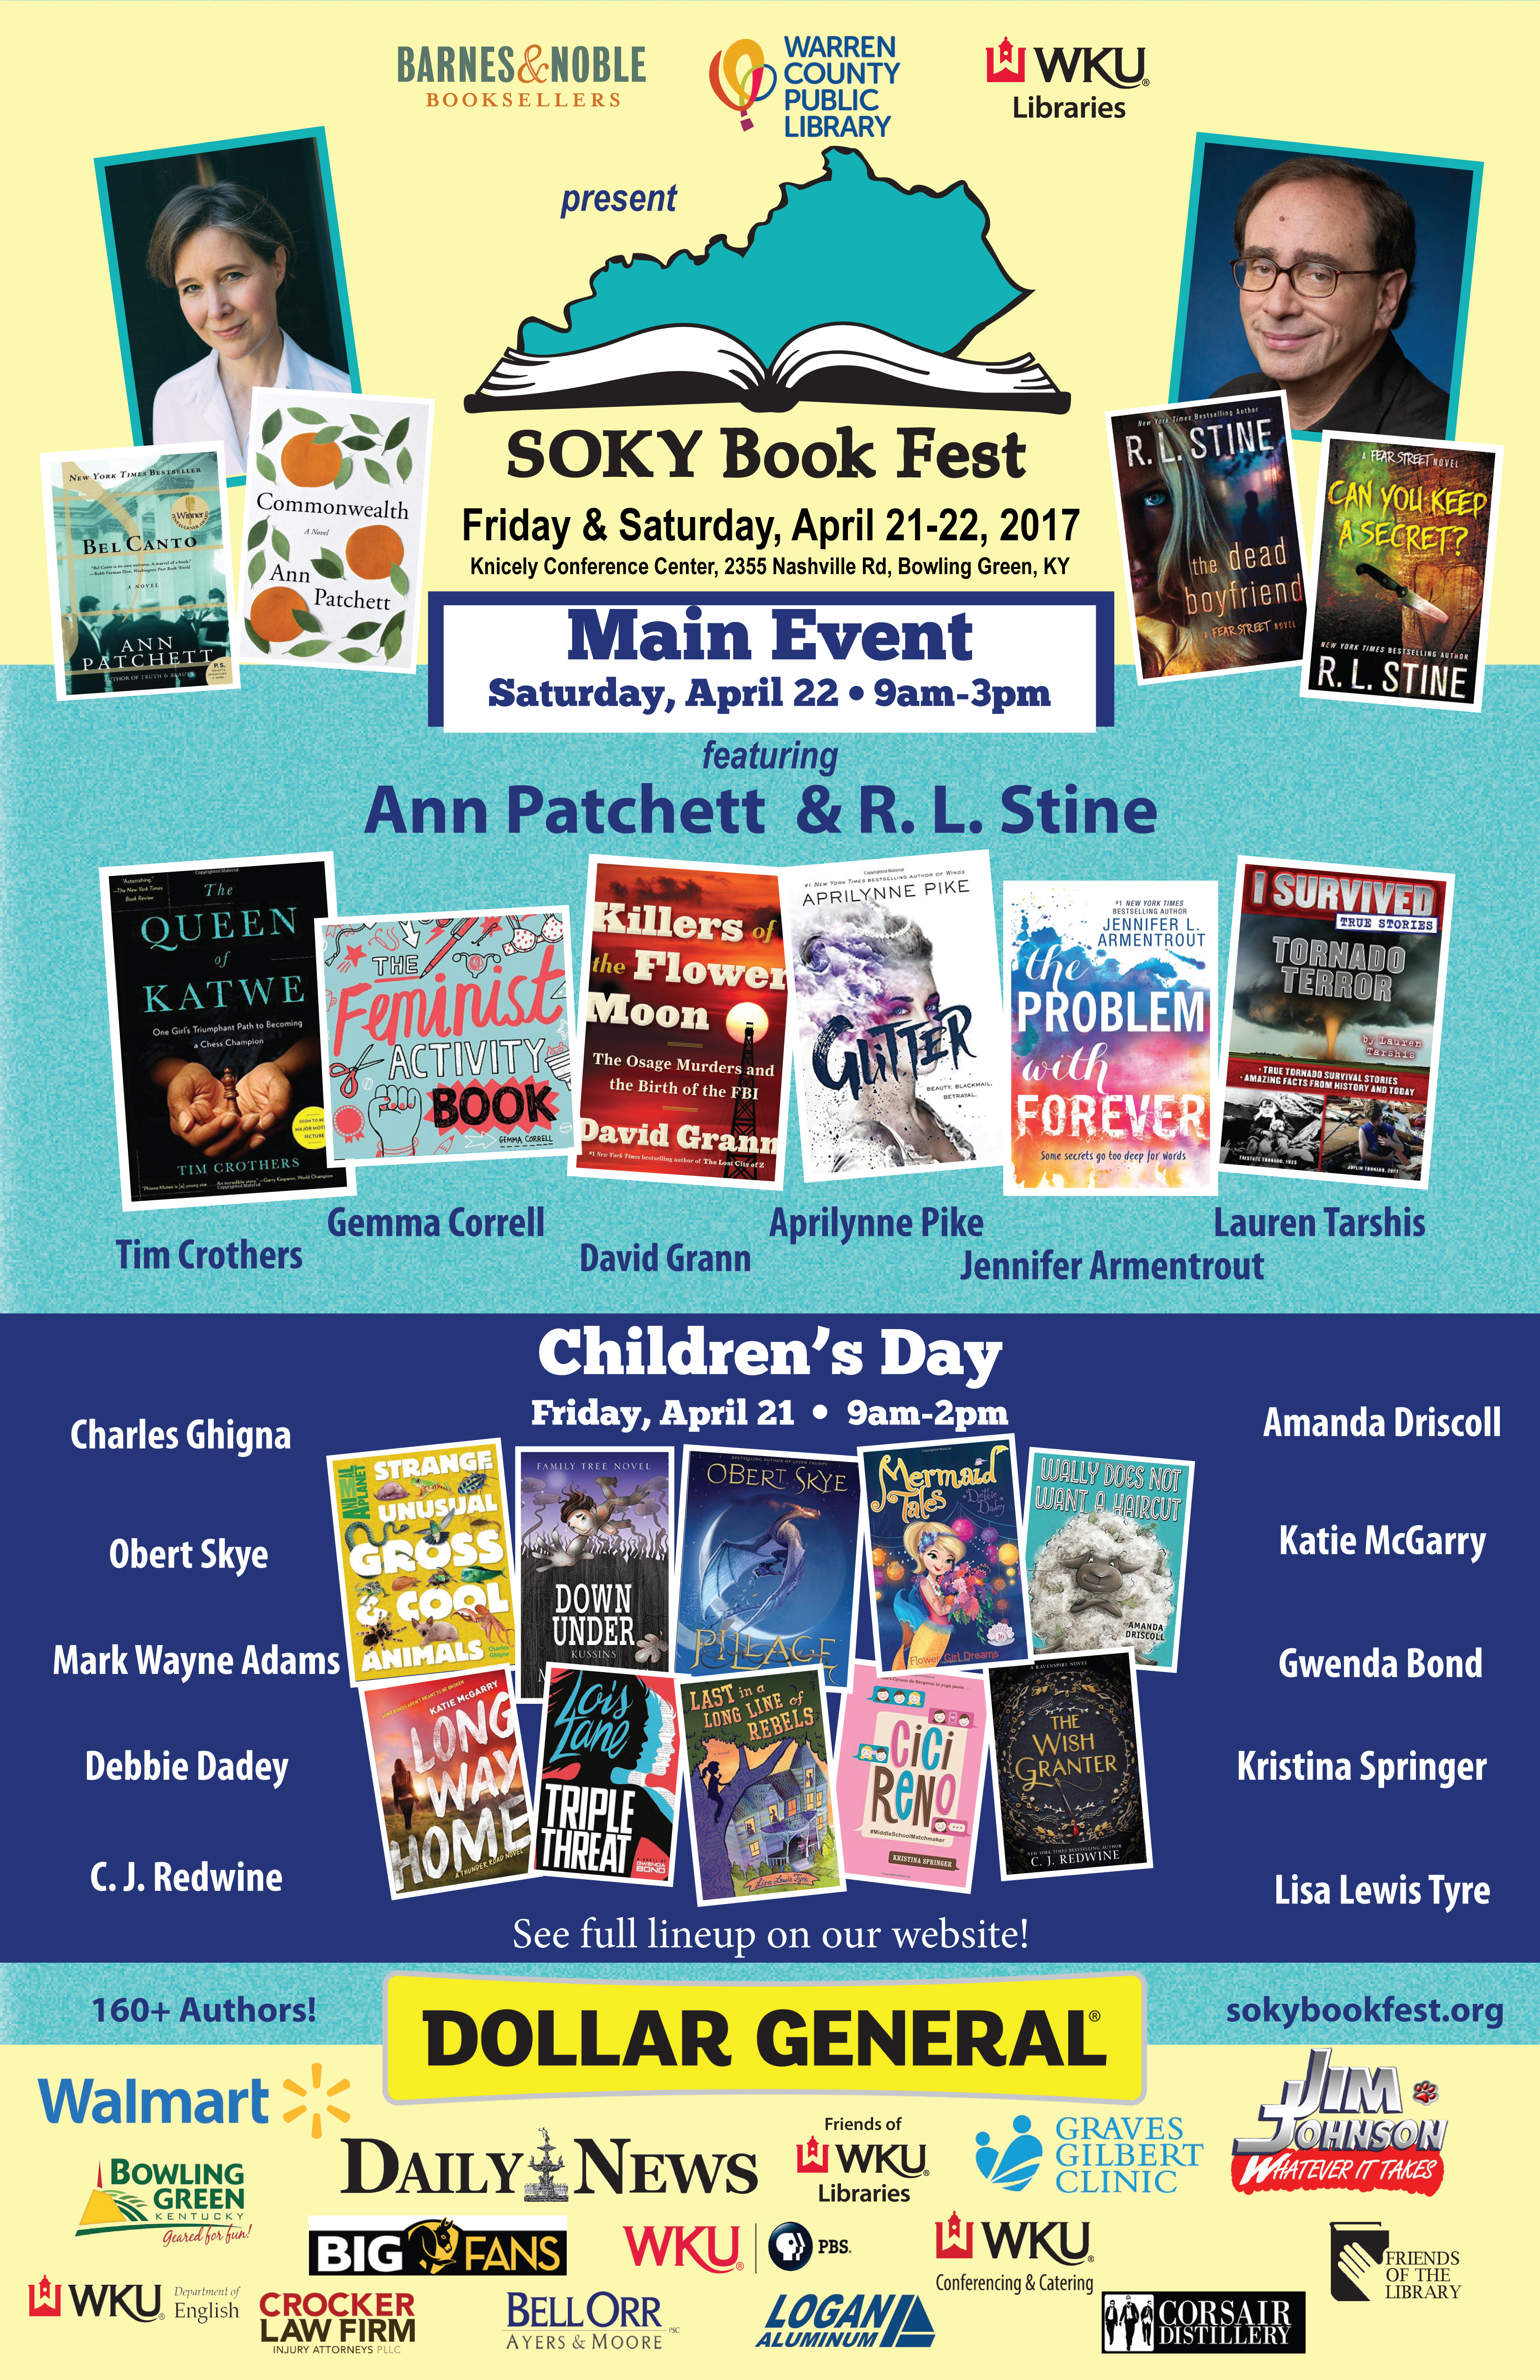 SOKY Bookfest 2017 Poster